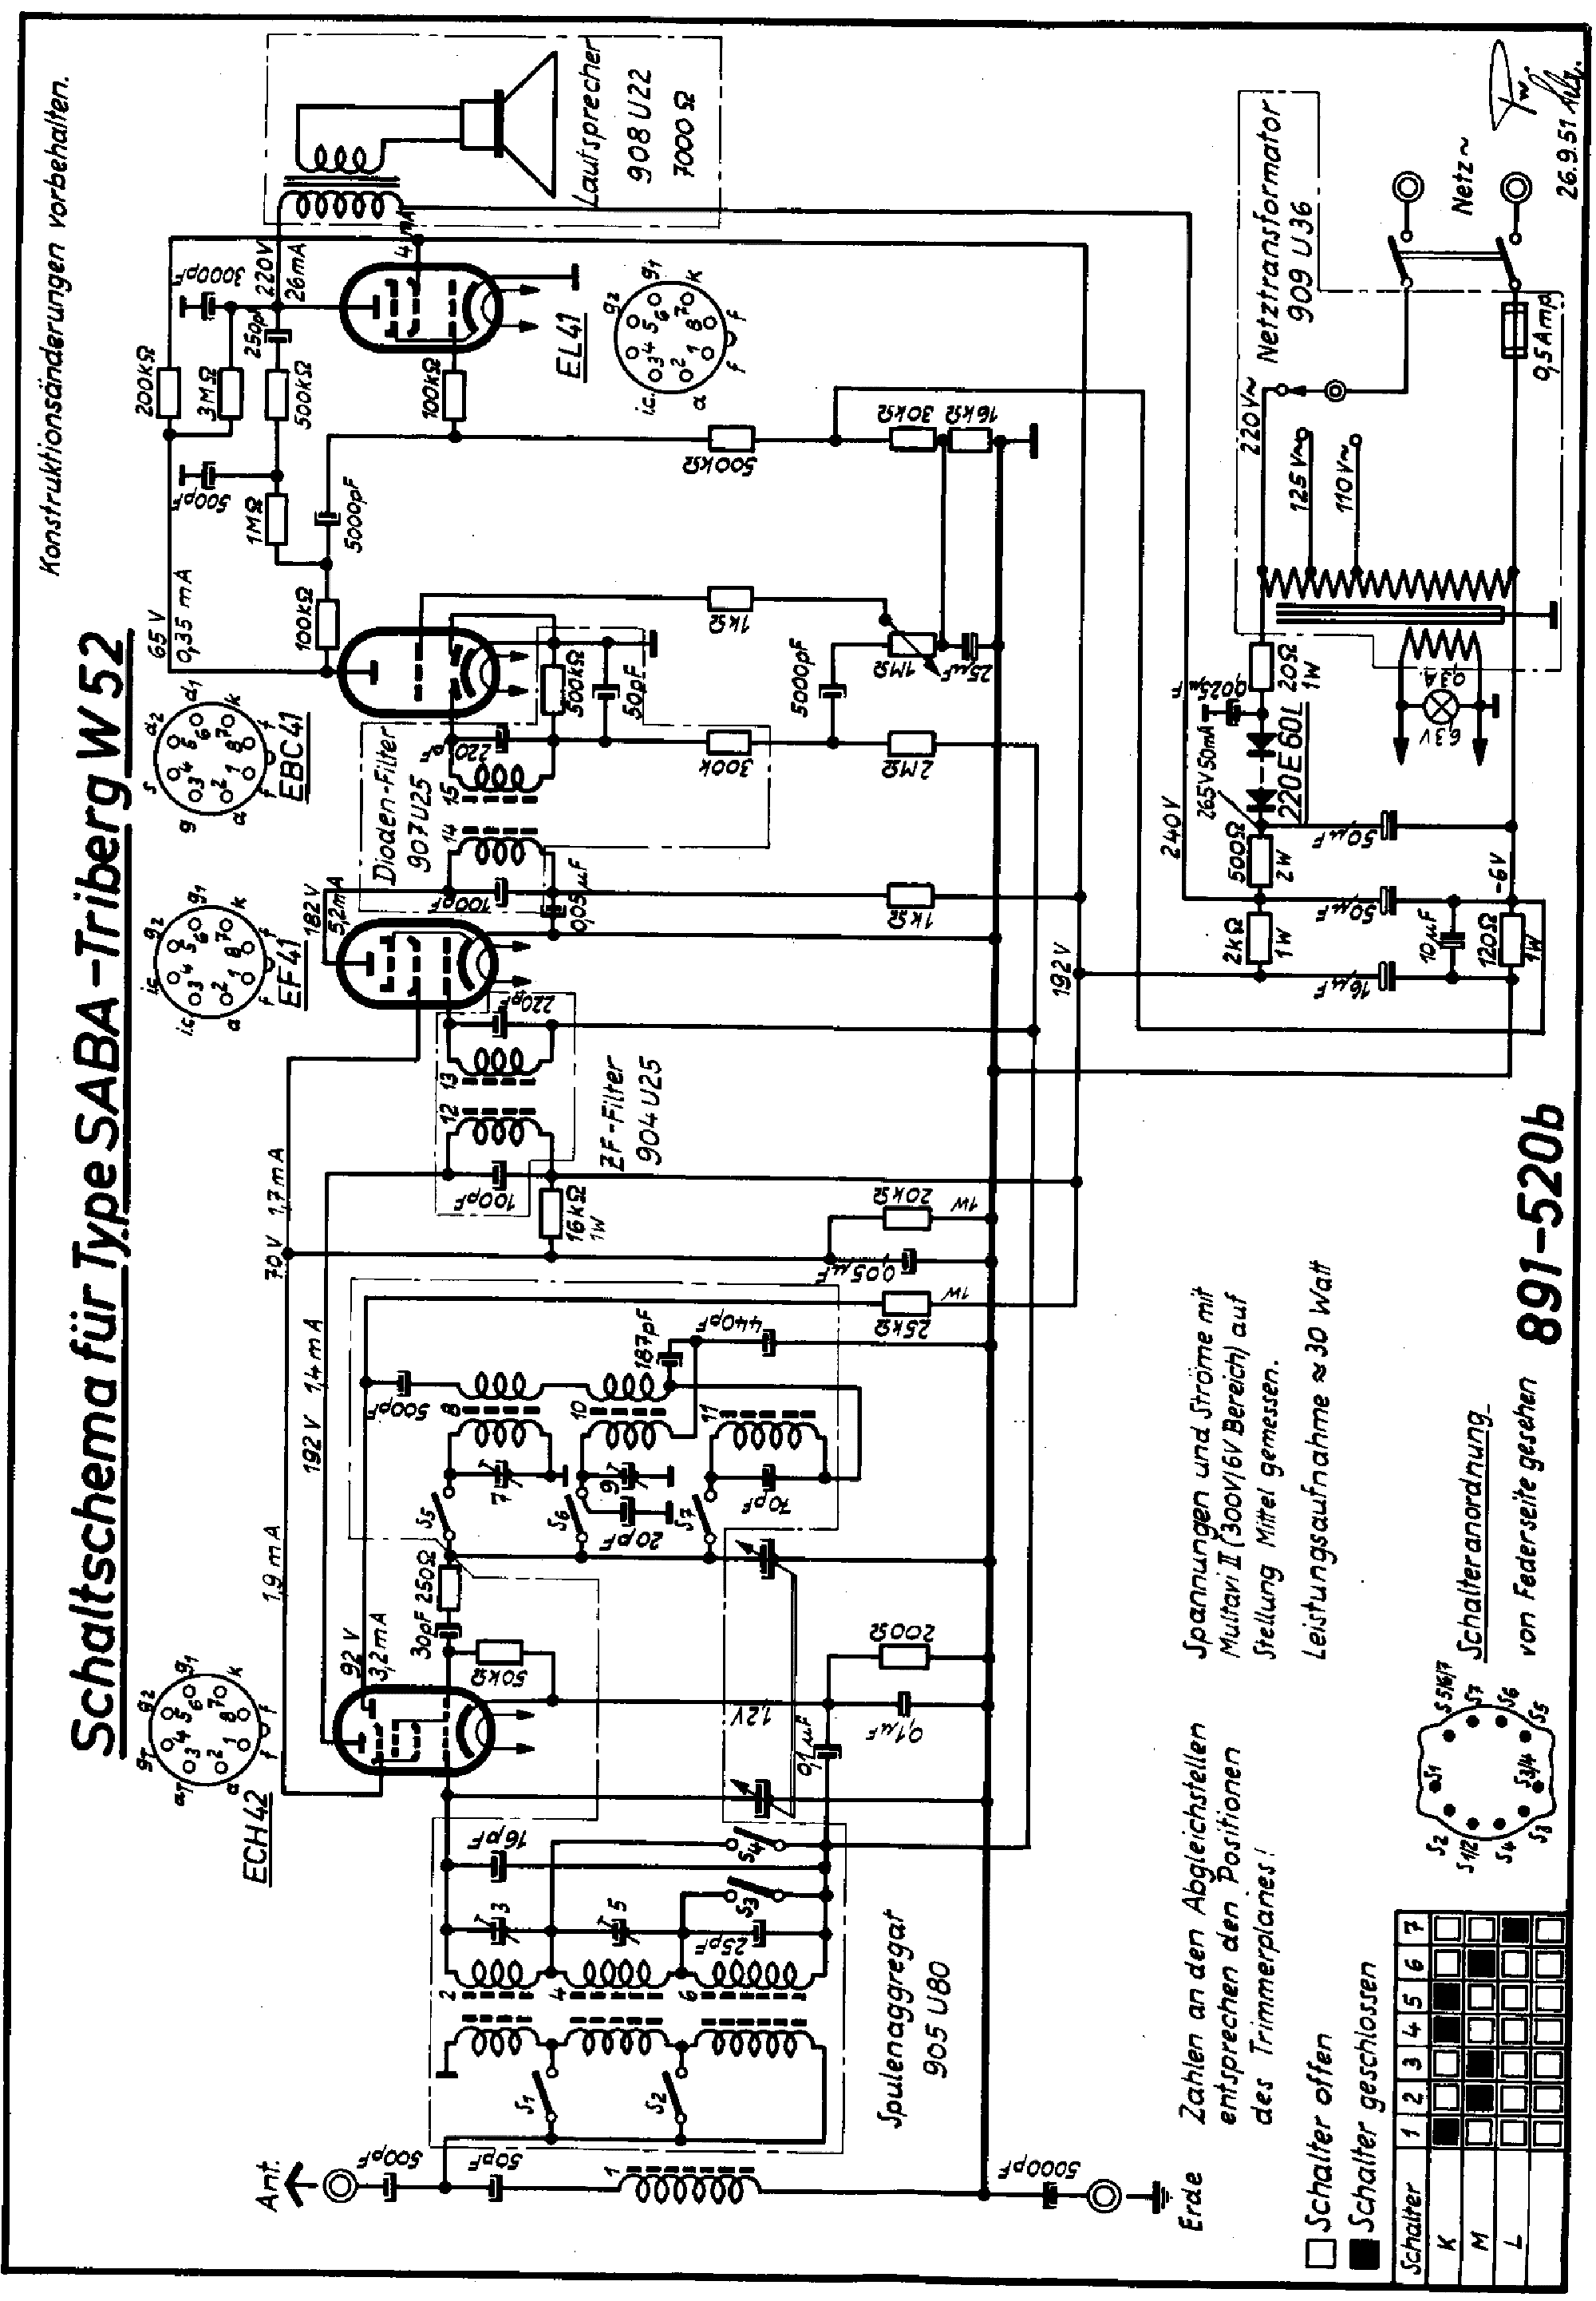 SABA TRIBERG-W52-WP52-GW52 AM-FM RECEIVER 1951-52 SM service manual (2nd page)